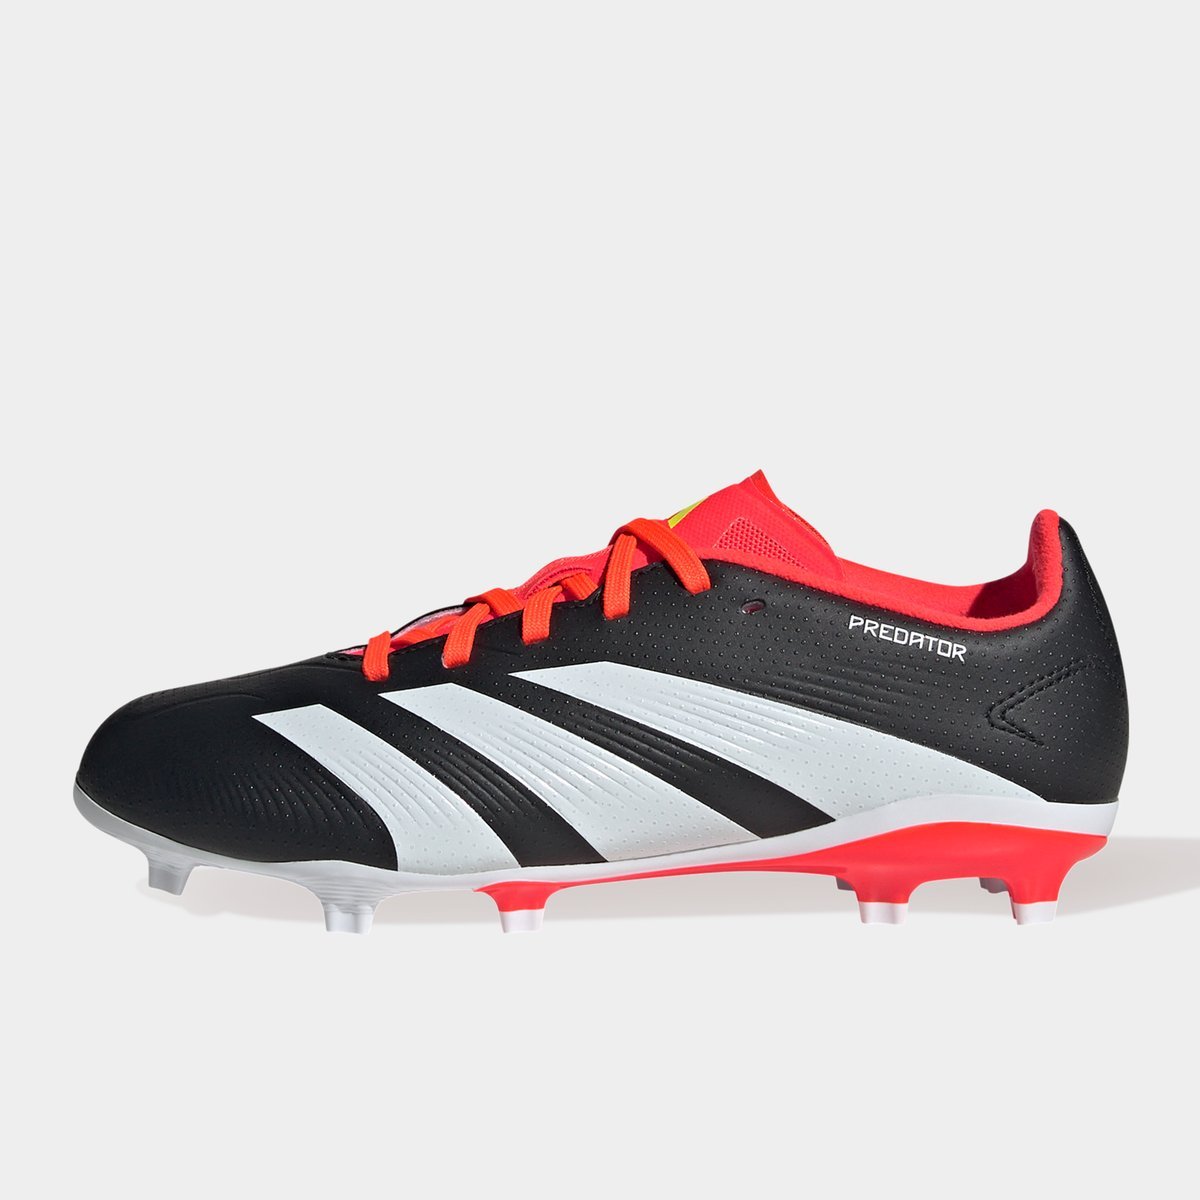 adidas Football Boots | Predator, X, Copa - Lovell Soccer